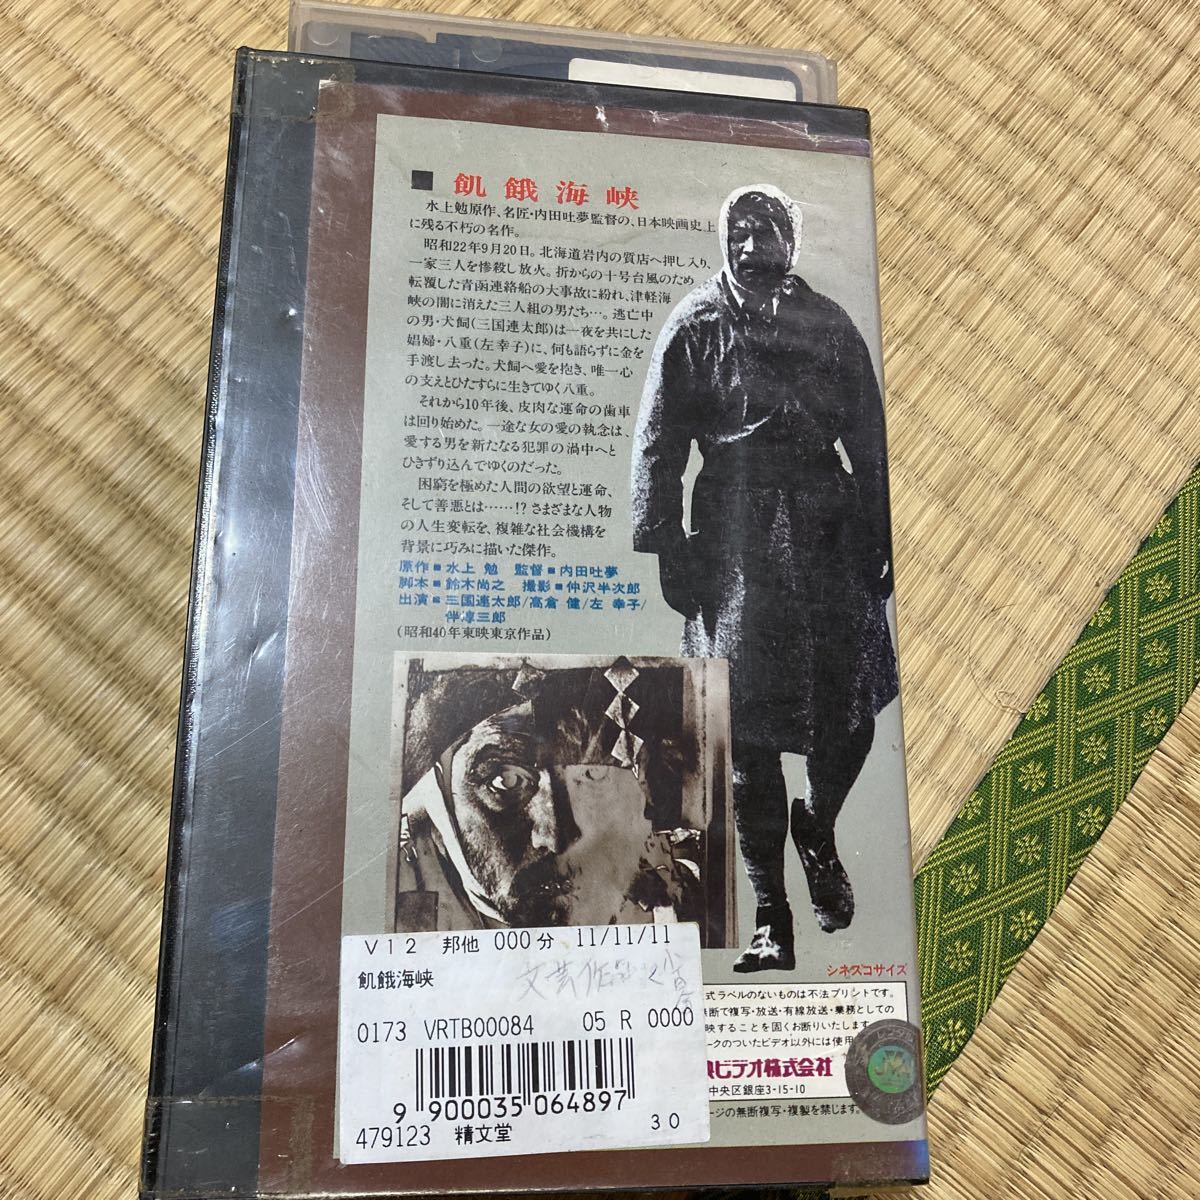 VHS 飢餓海峡 三國連太郎 高倉健 2本組 昭和 平成 日本 映画 ビデオテープ 映画